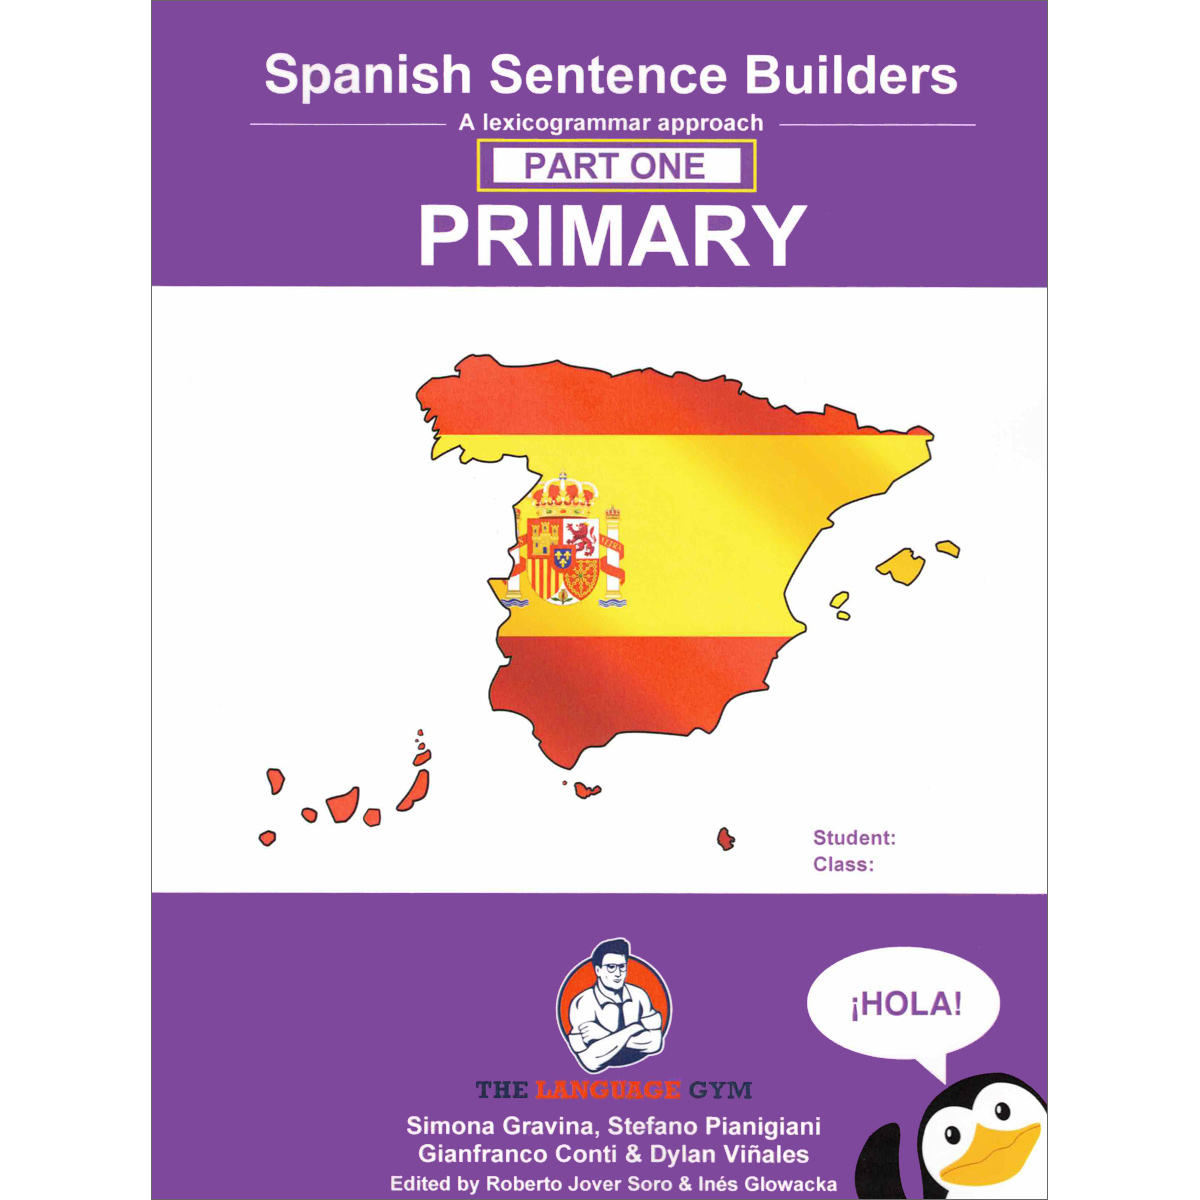 Spanish Sentence Builders - Primary (Part One)